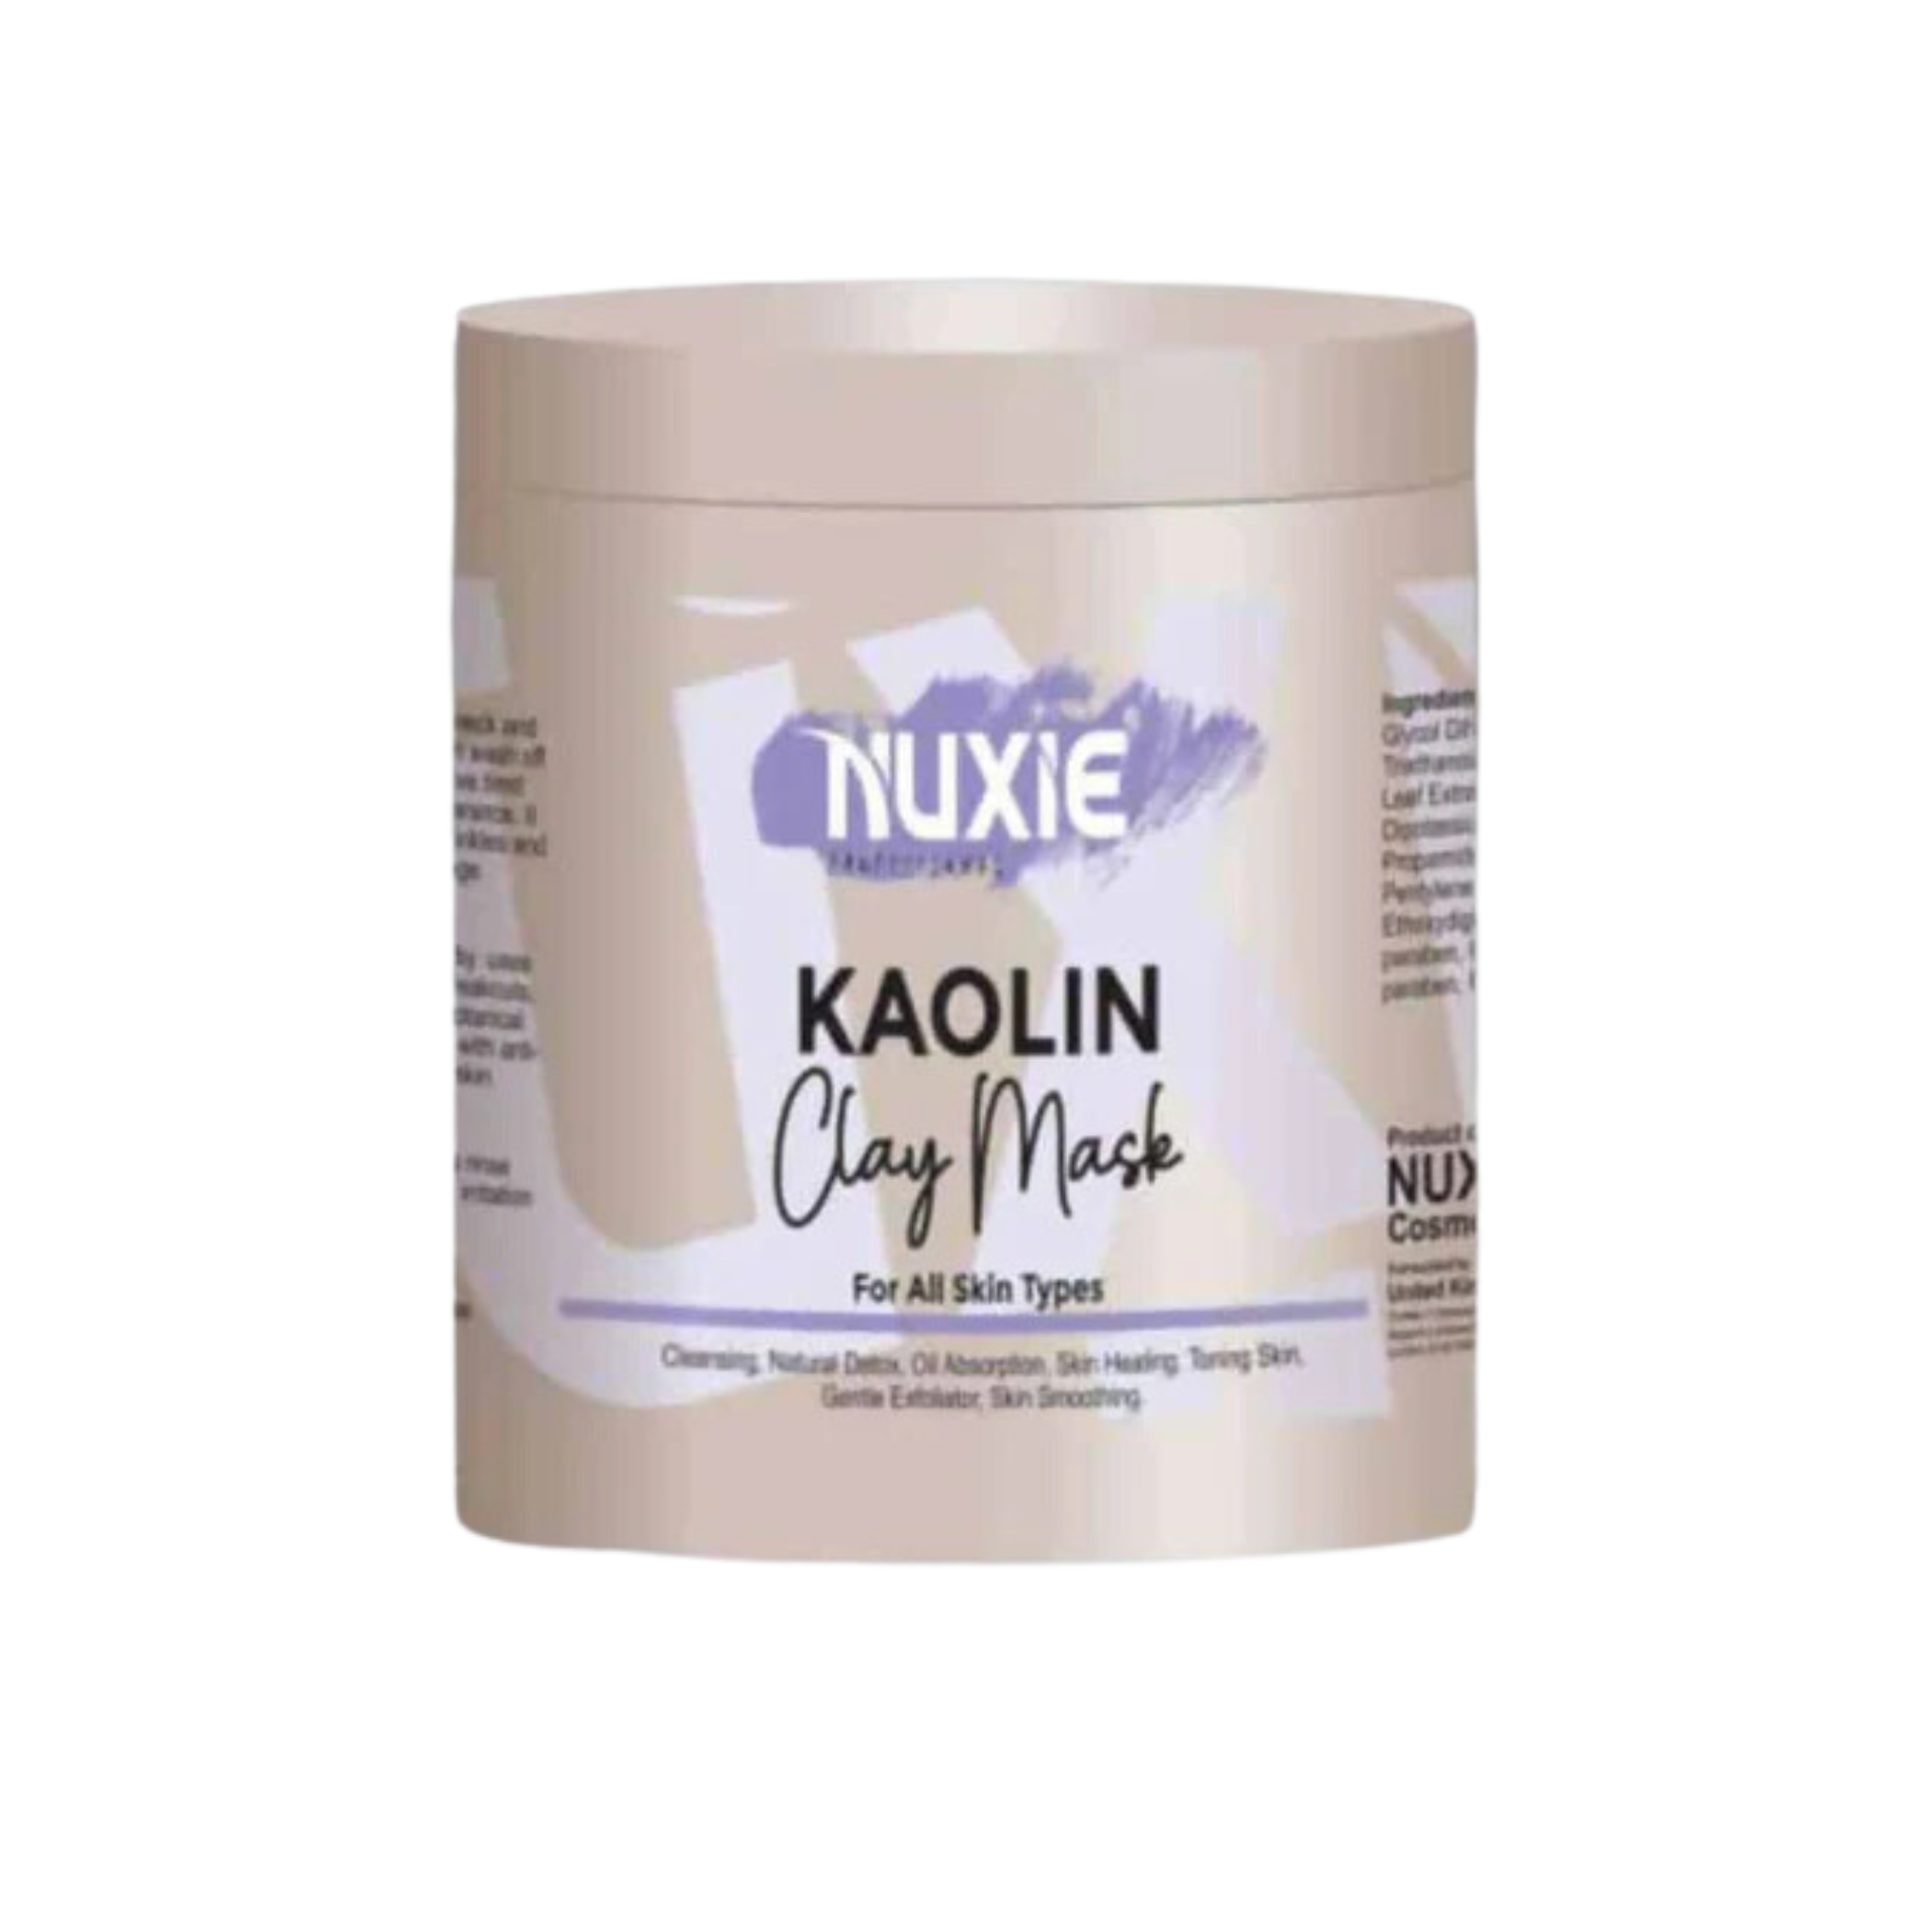 Nuxie Facial Kit, Nourish & Revitalize The Skin